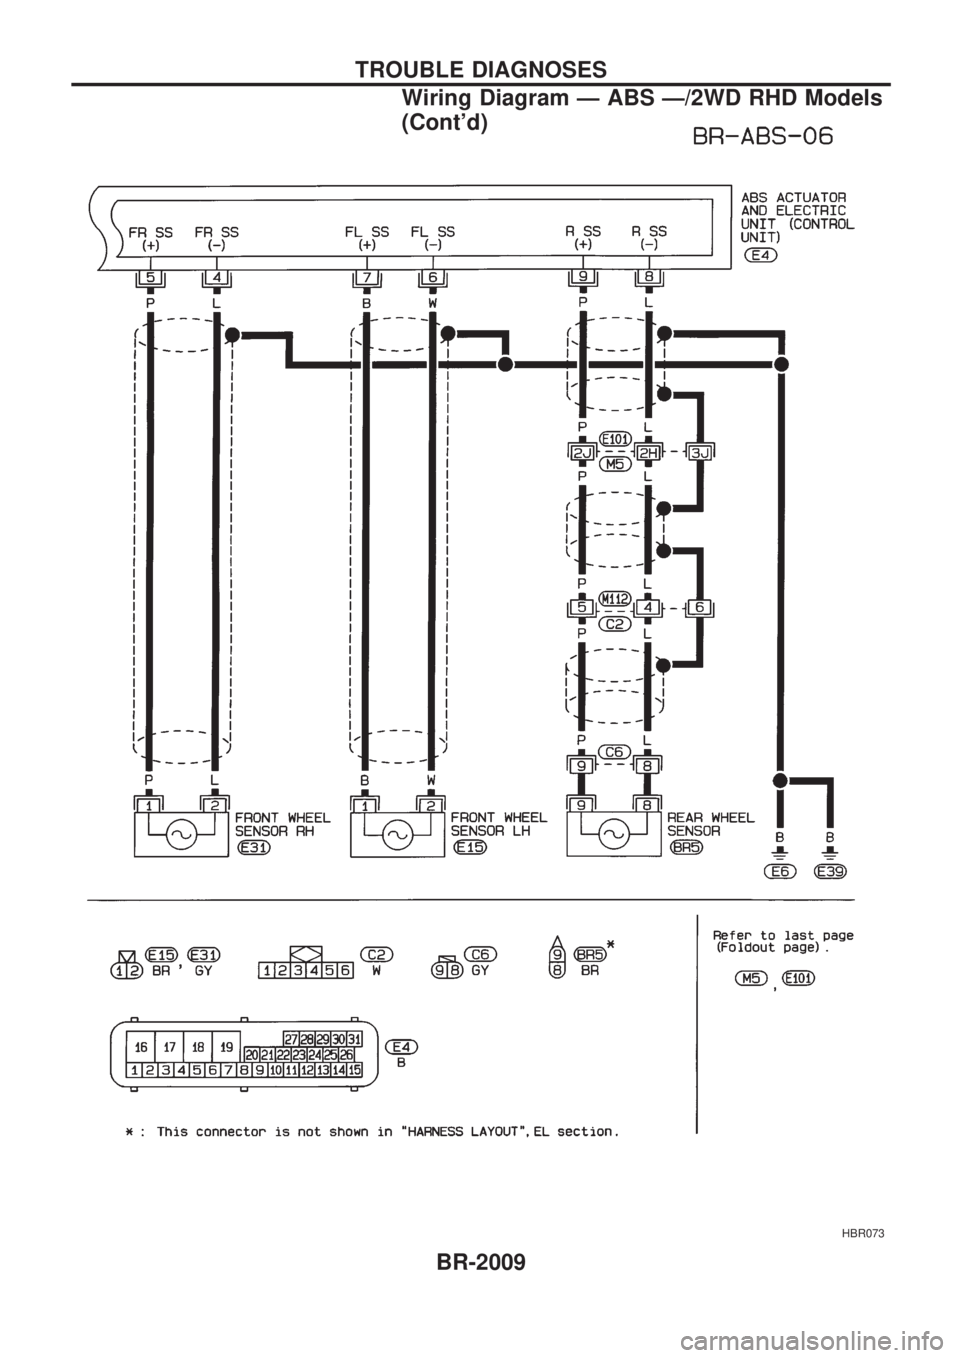 NISSAN PICK-UP 1999  Repair Manual HBR073
TROUBLE DIAGNOSES
Wiring Diagram Ð ABS Ð/2WD RHD Models
(Contd)
BR-2009 